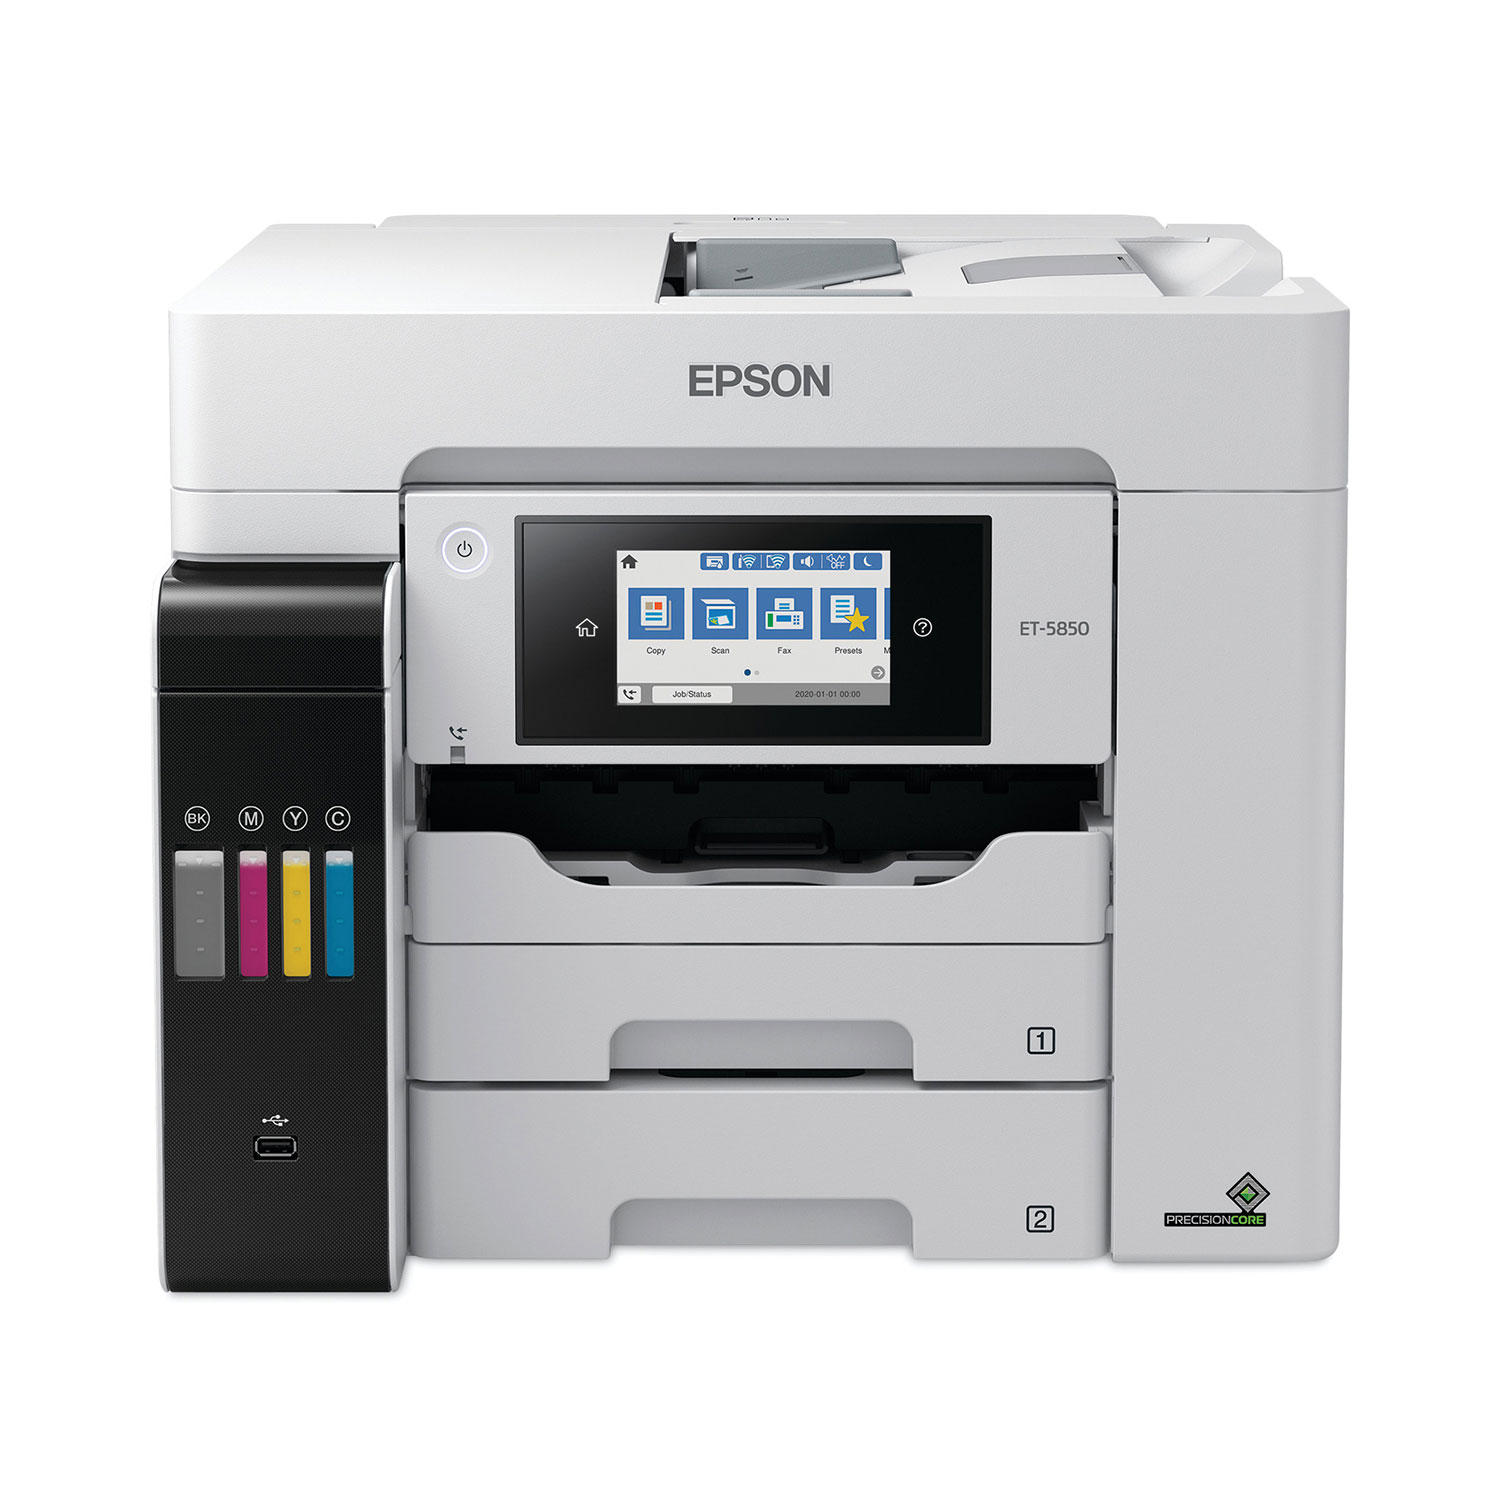 Epson EcoTank Pro ET-5850 All-in-One Supertank Printer, Copy/Fax/Print/Scan